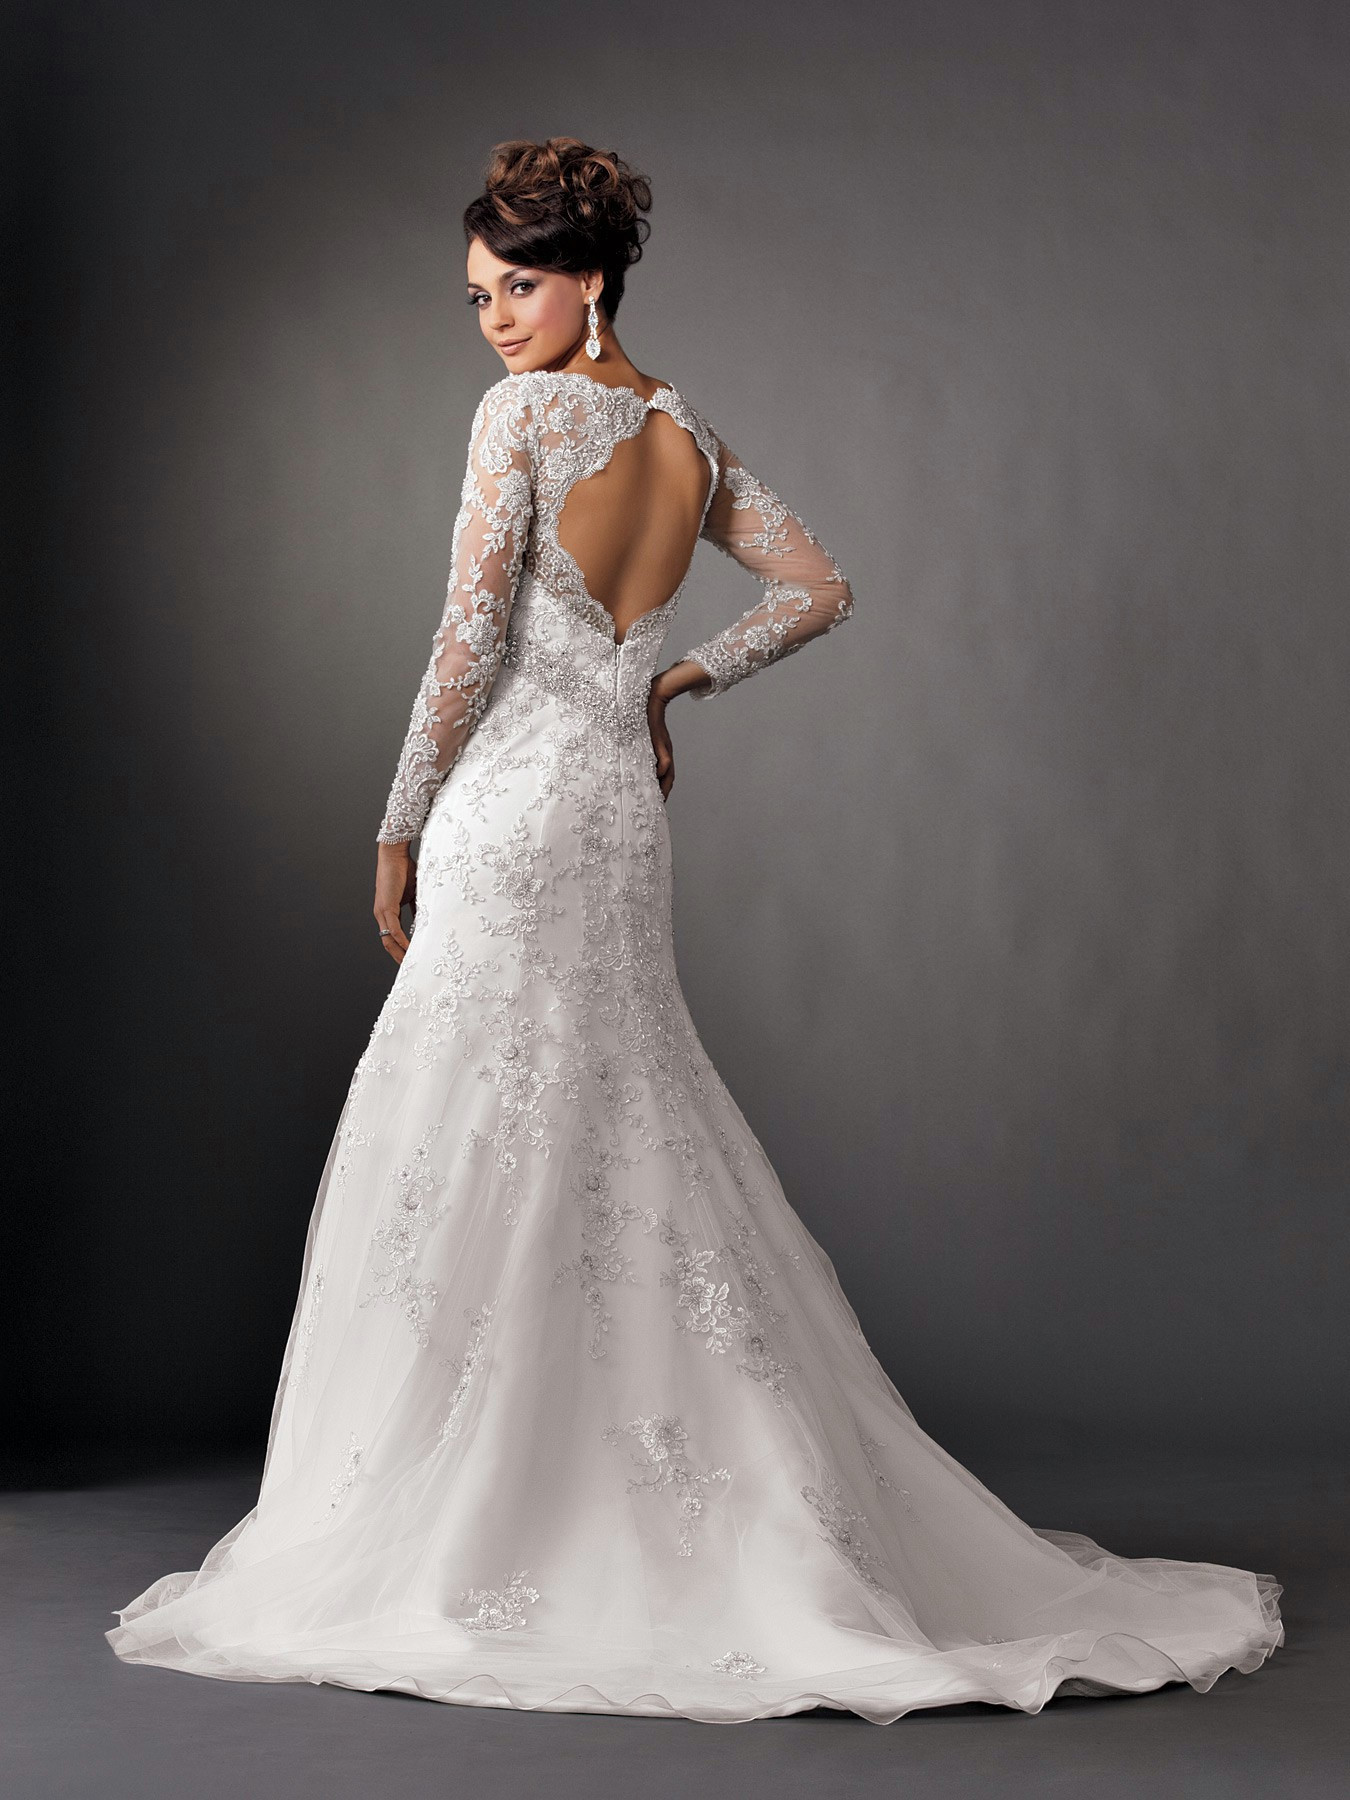 Lace Sleeve Wedding Dress
 2014 2015 Wedding Dress Trends Lace Sleeves